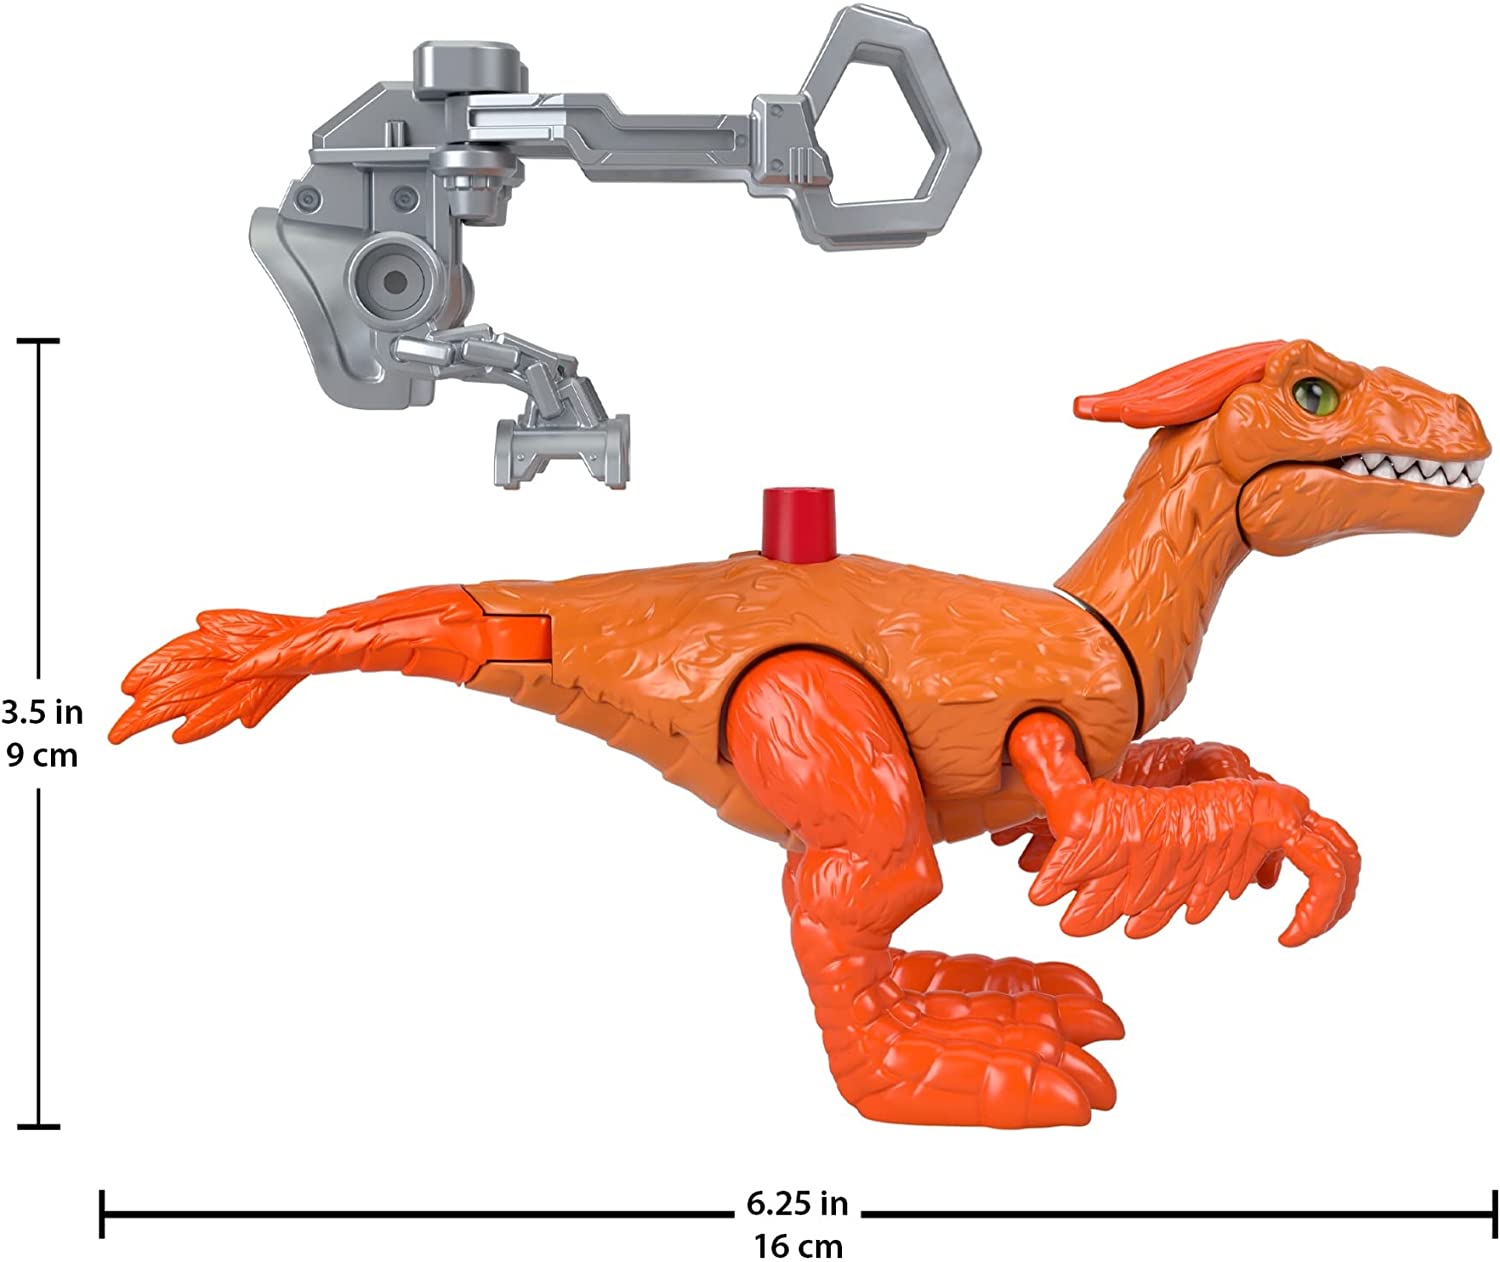 Fisher-Price Imaginext Jurassic World Pyroraptor Dinosaur Figure